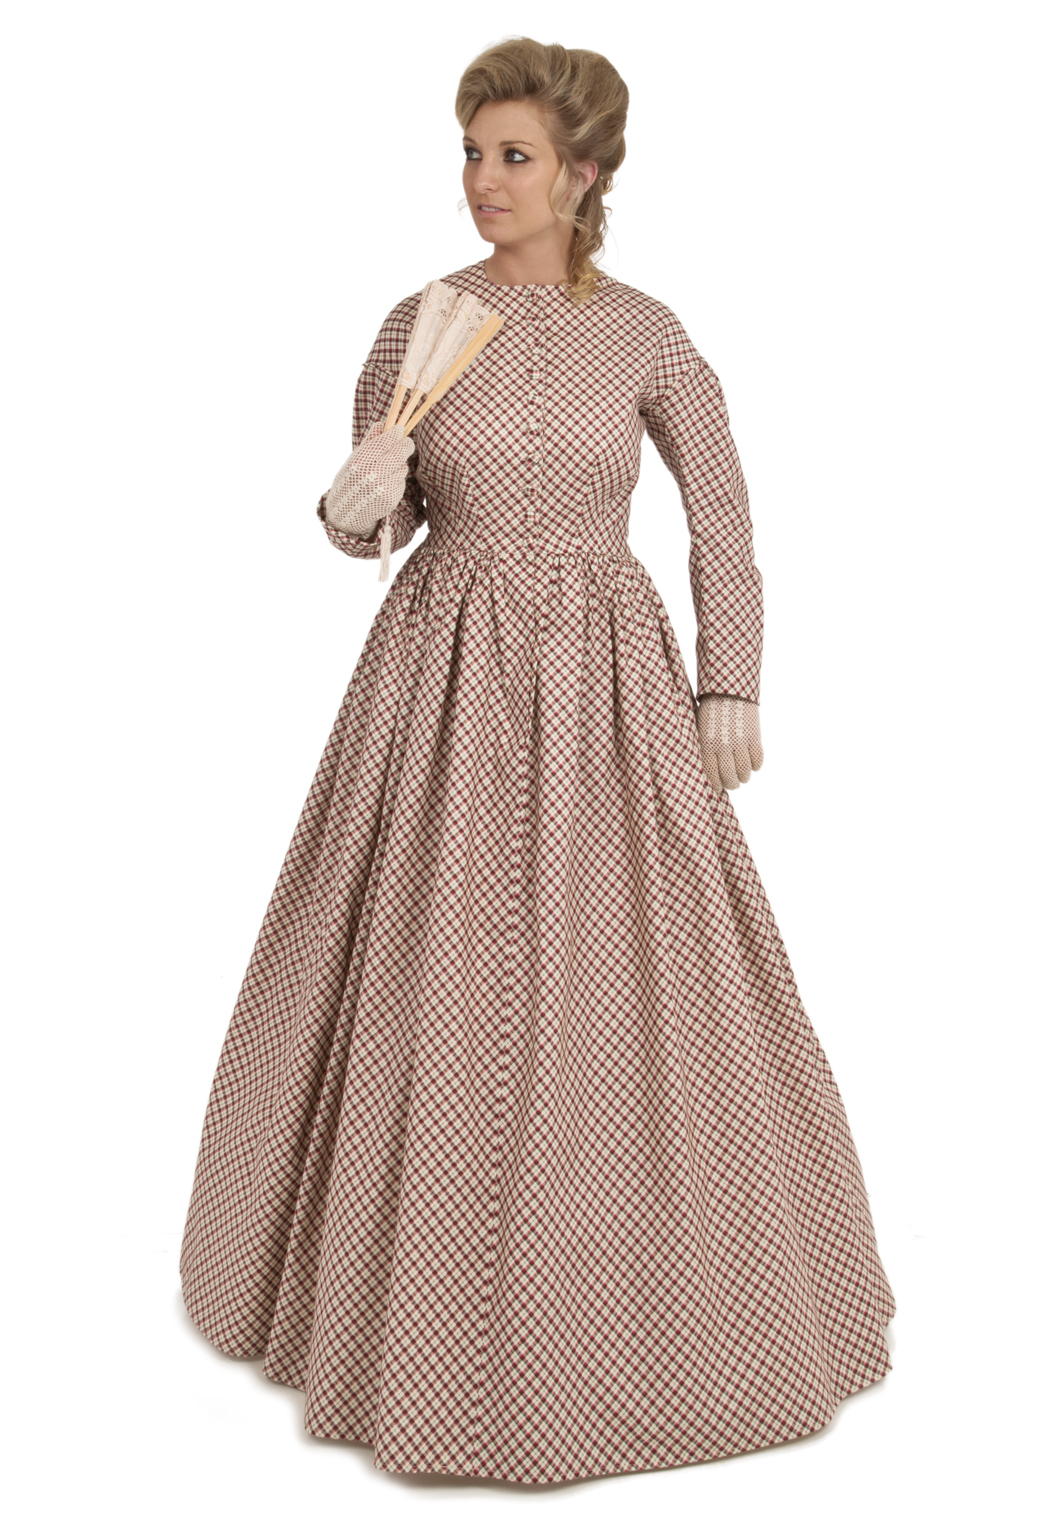 Civil War Victorian Style Dress